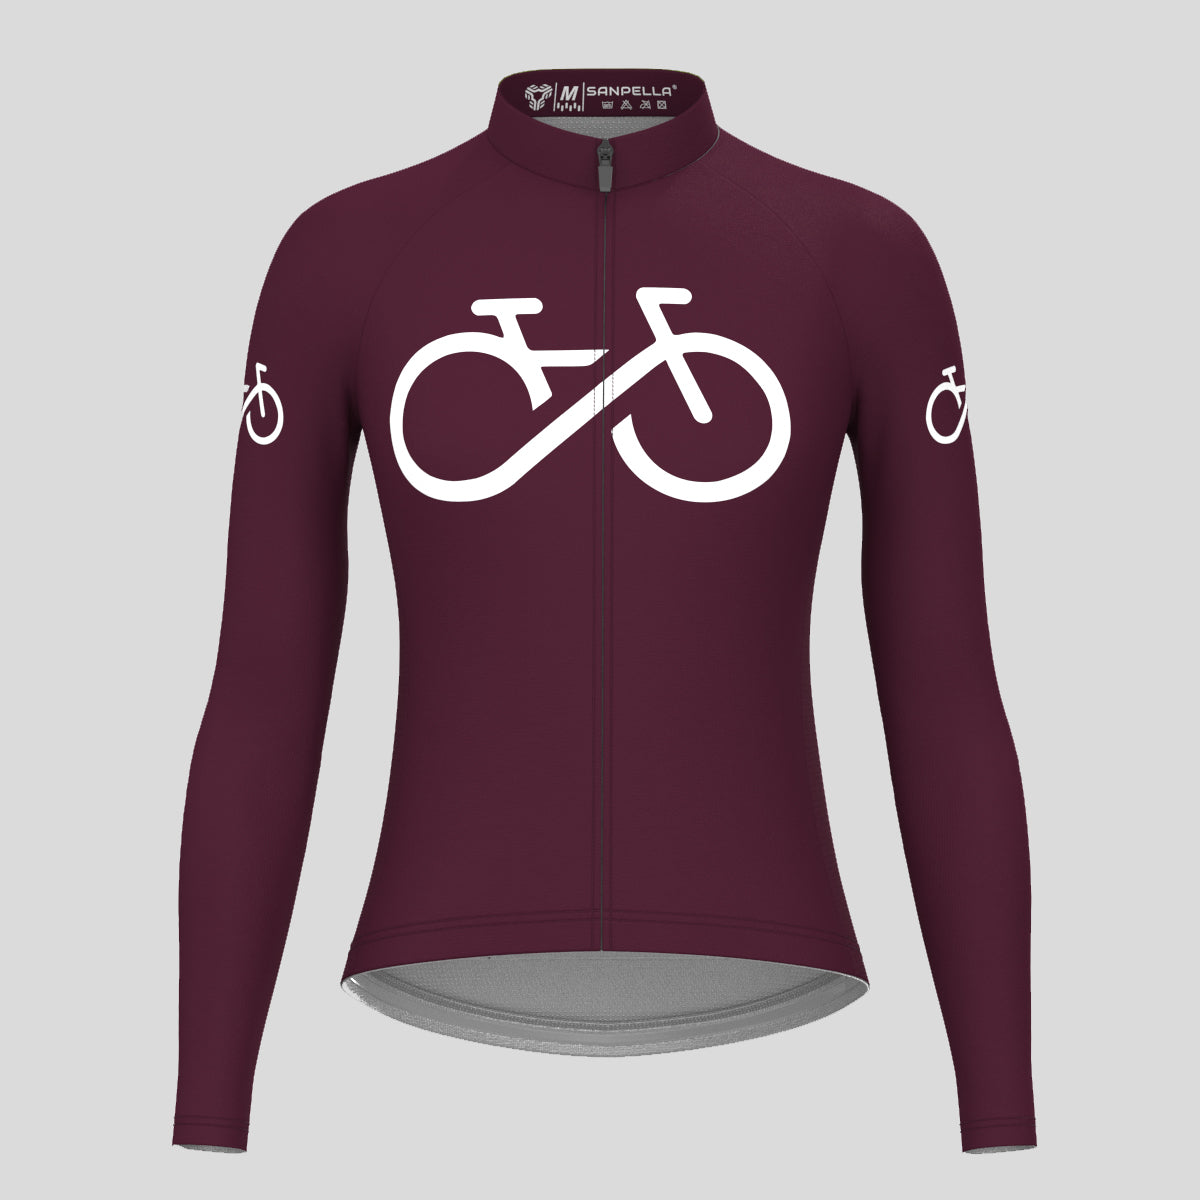 Bike Forever Women's LS Cycling Jersey - Burgundy